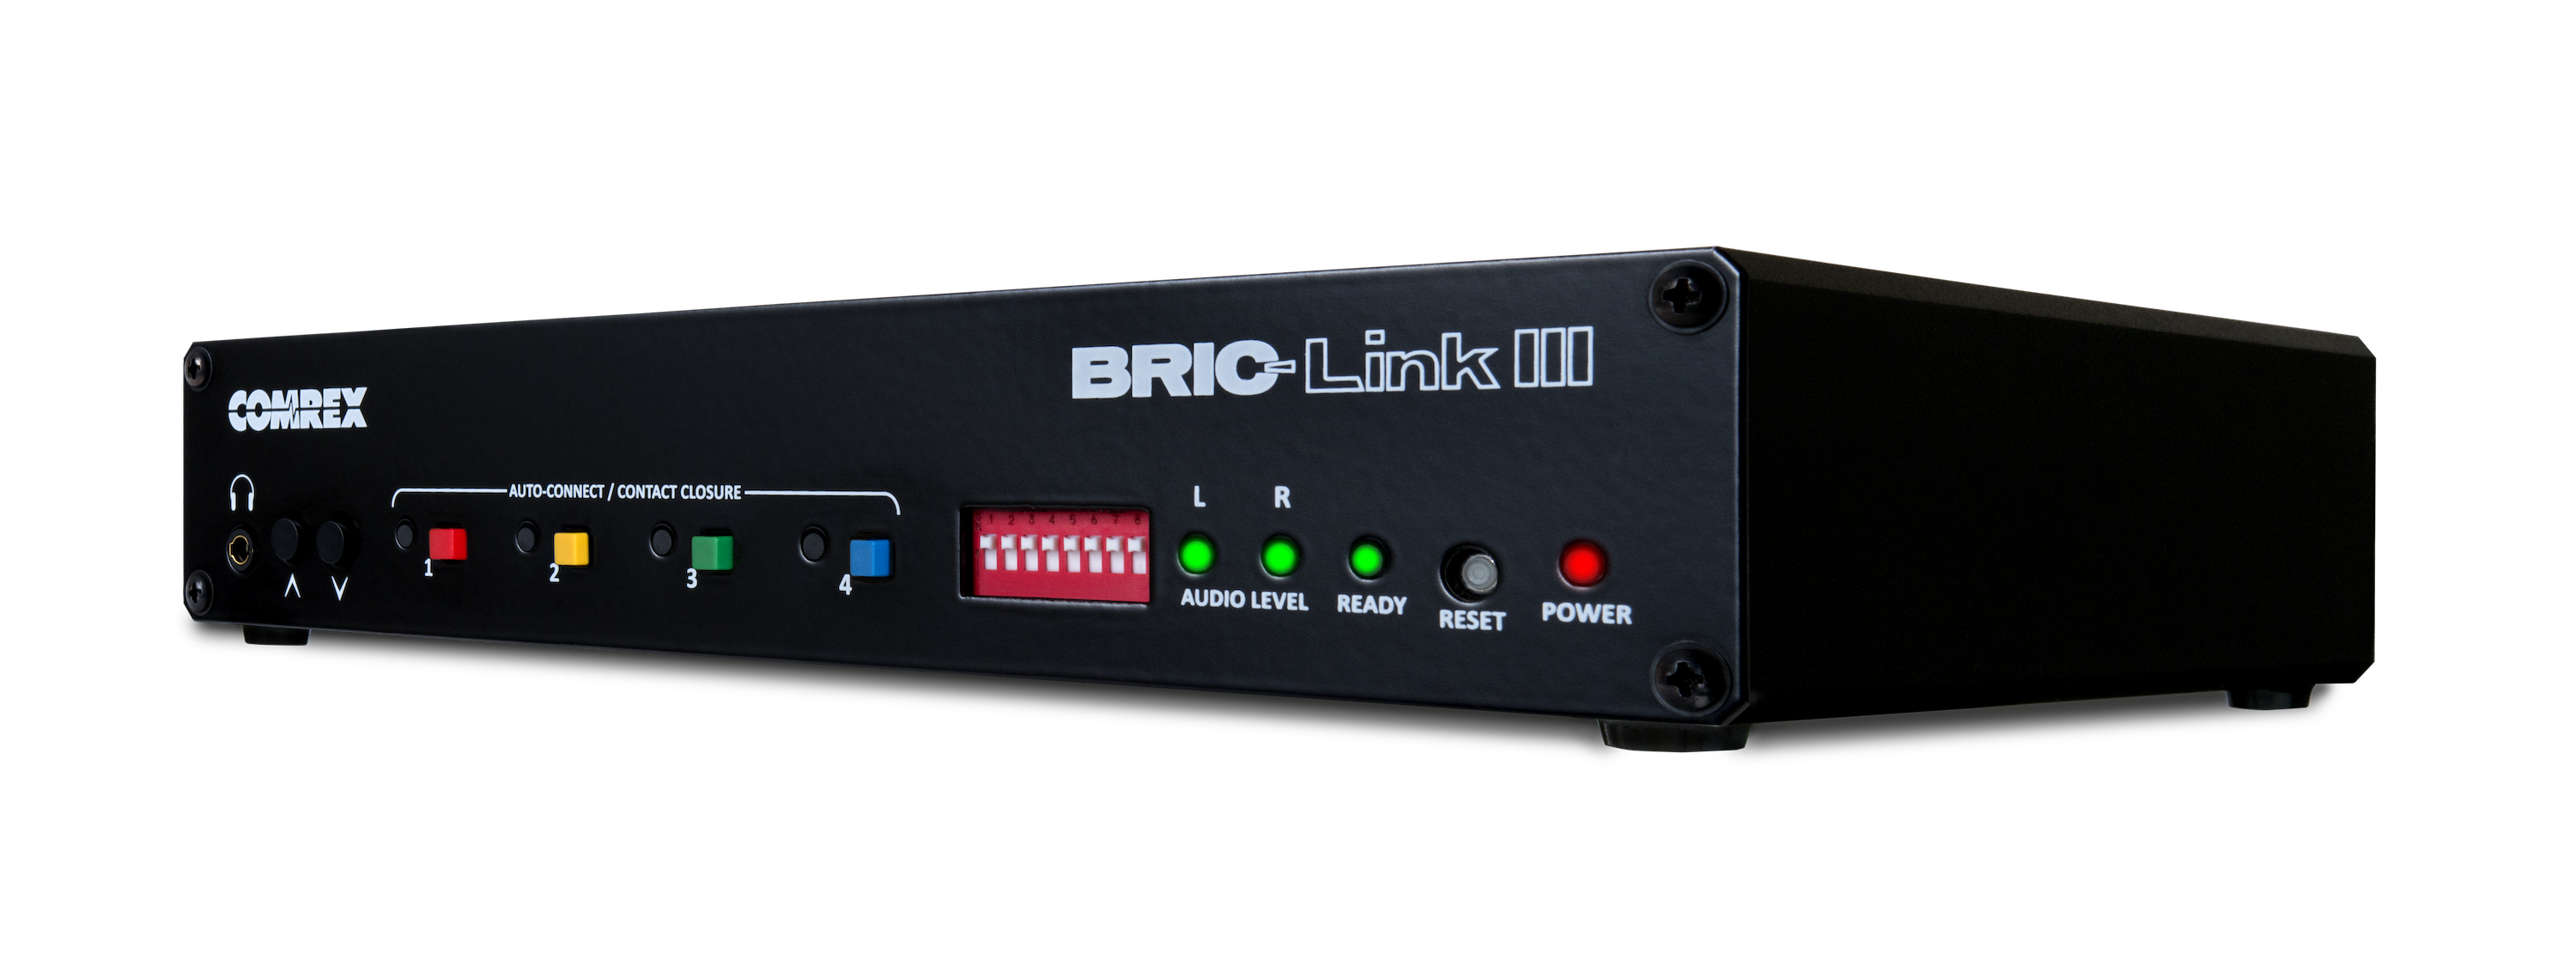 BRIC-Link III, a new IP audio codec from Comrex